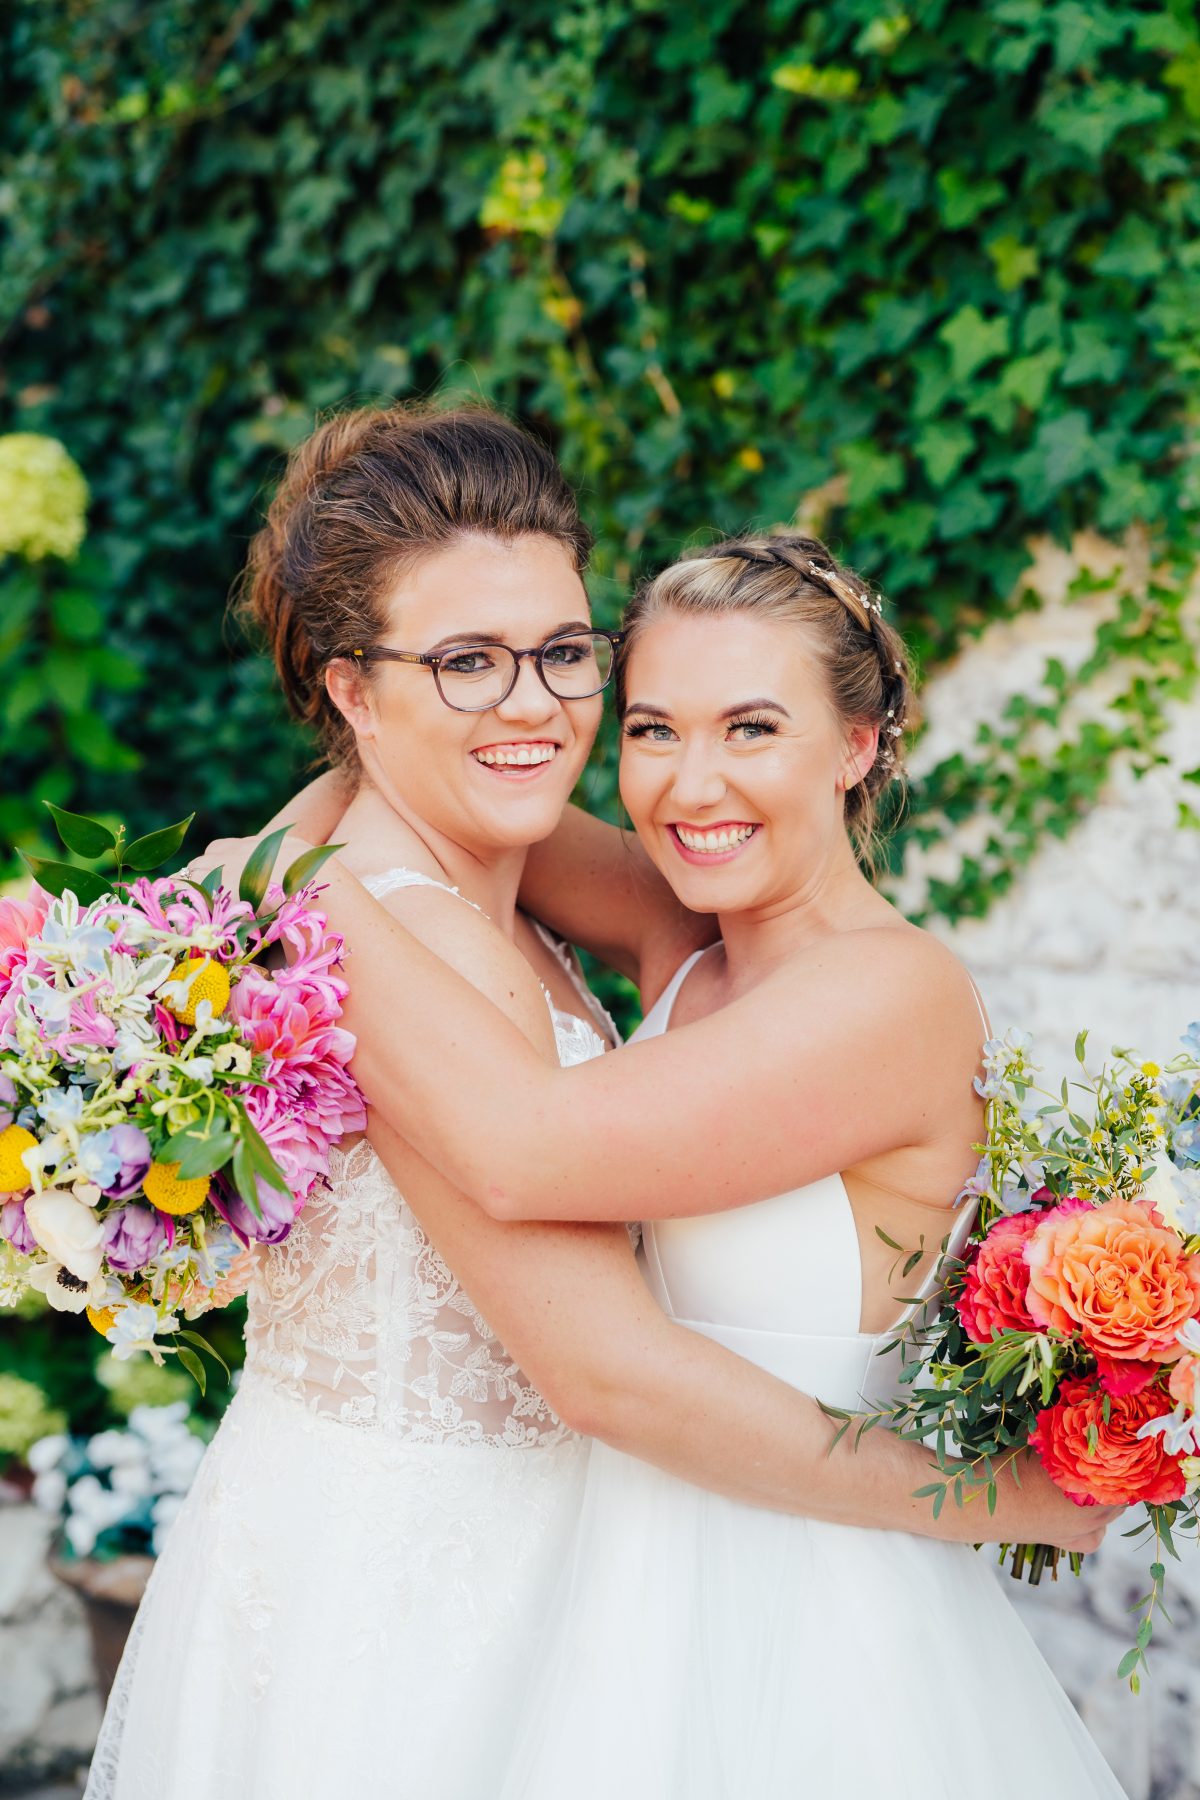 Lesbian wedding portrait northwest arkansas